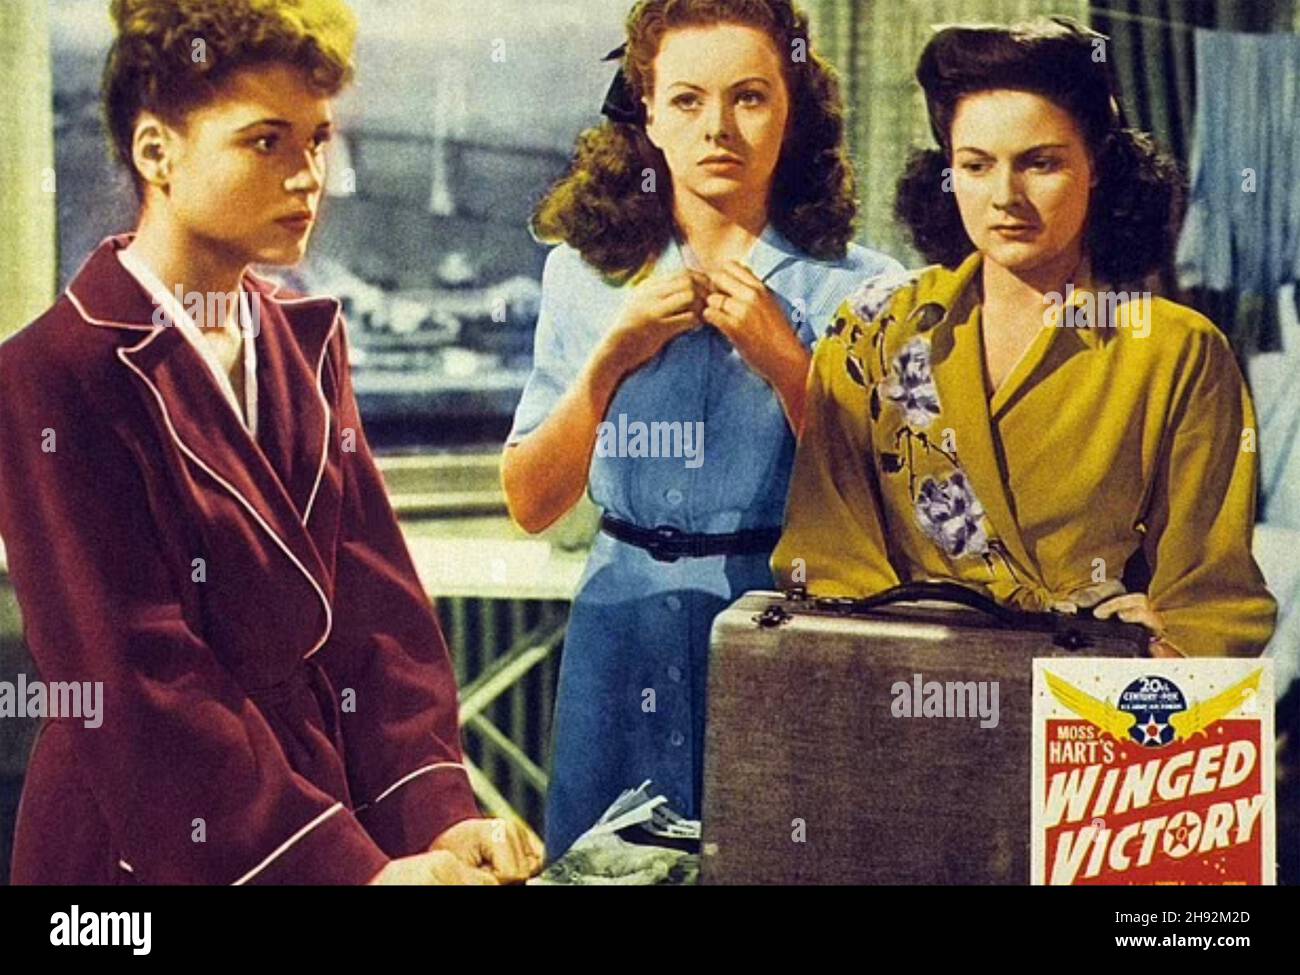 WINGED VICTORY 1944 20th Century Fox film avec de gauche: Judy Holliday, Jeanne Crain, JO-Carroll Dennison. Banque D'Images